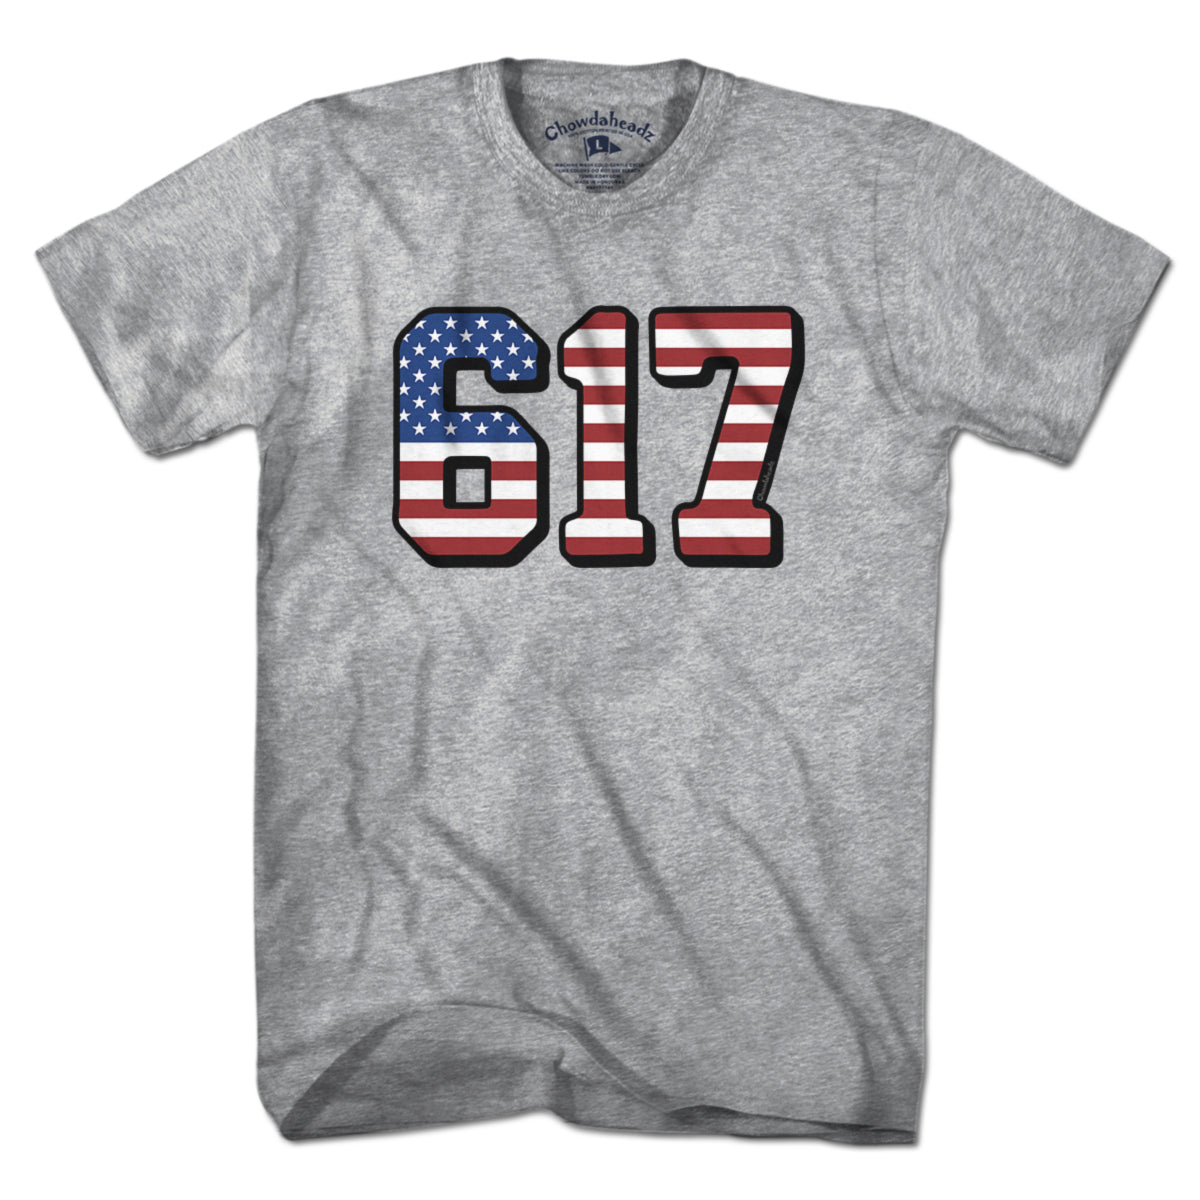 Boston 617 USA T-Shirt - Chowdaheadz